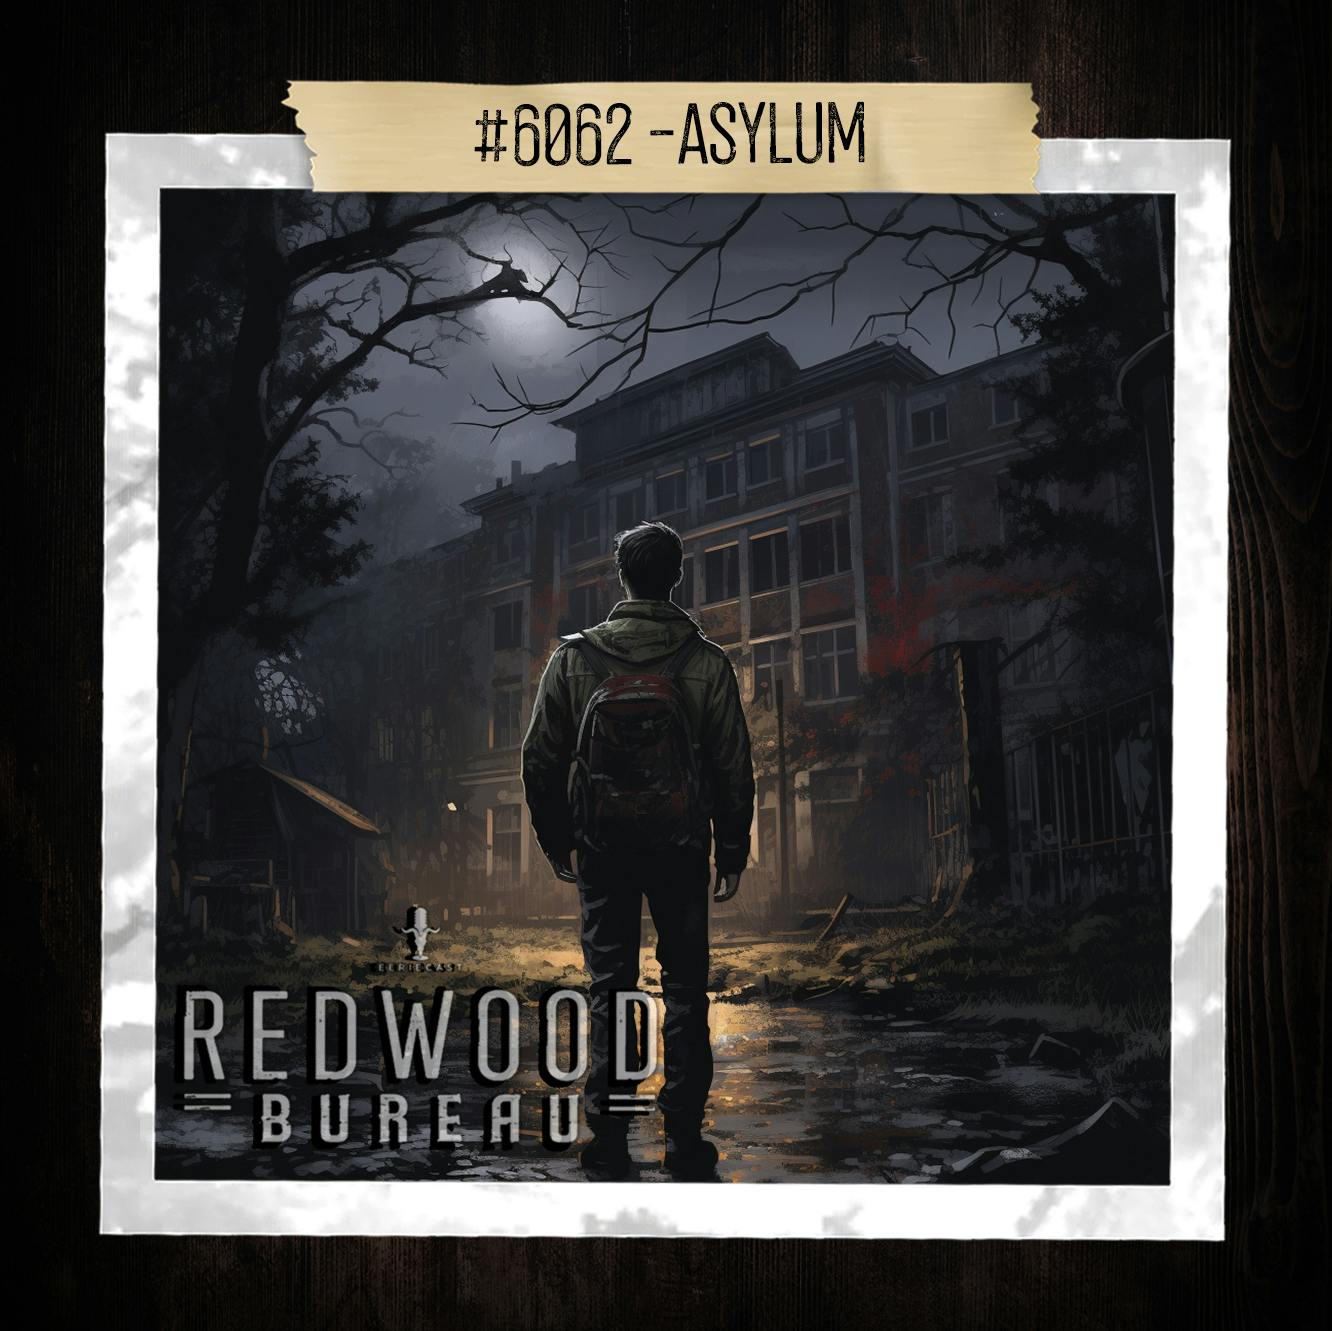 "ASYLUM" - Redwood Bureau Phenomenon #6062